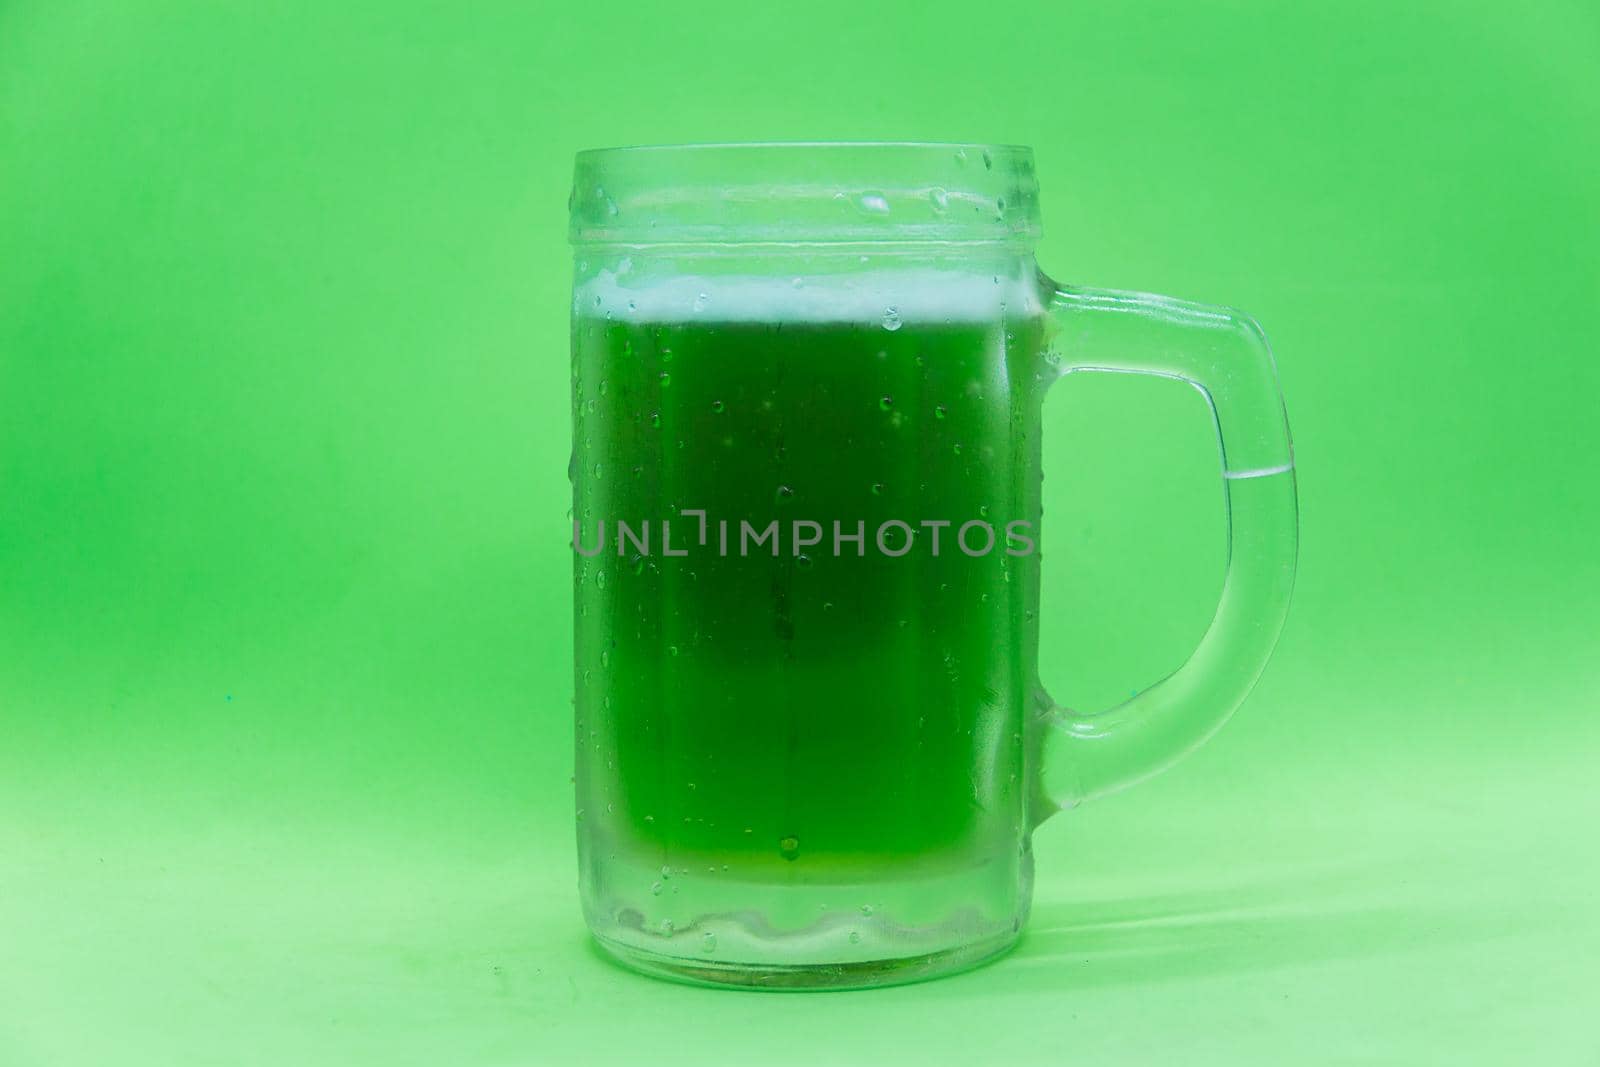 green beer mug st patricks day symbol